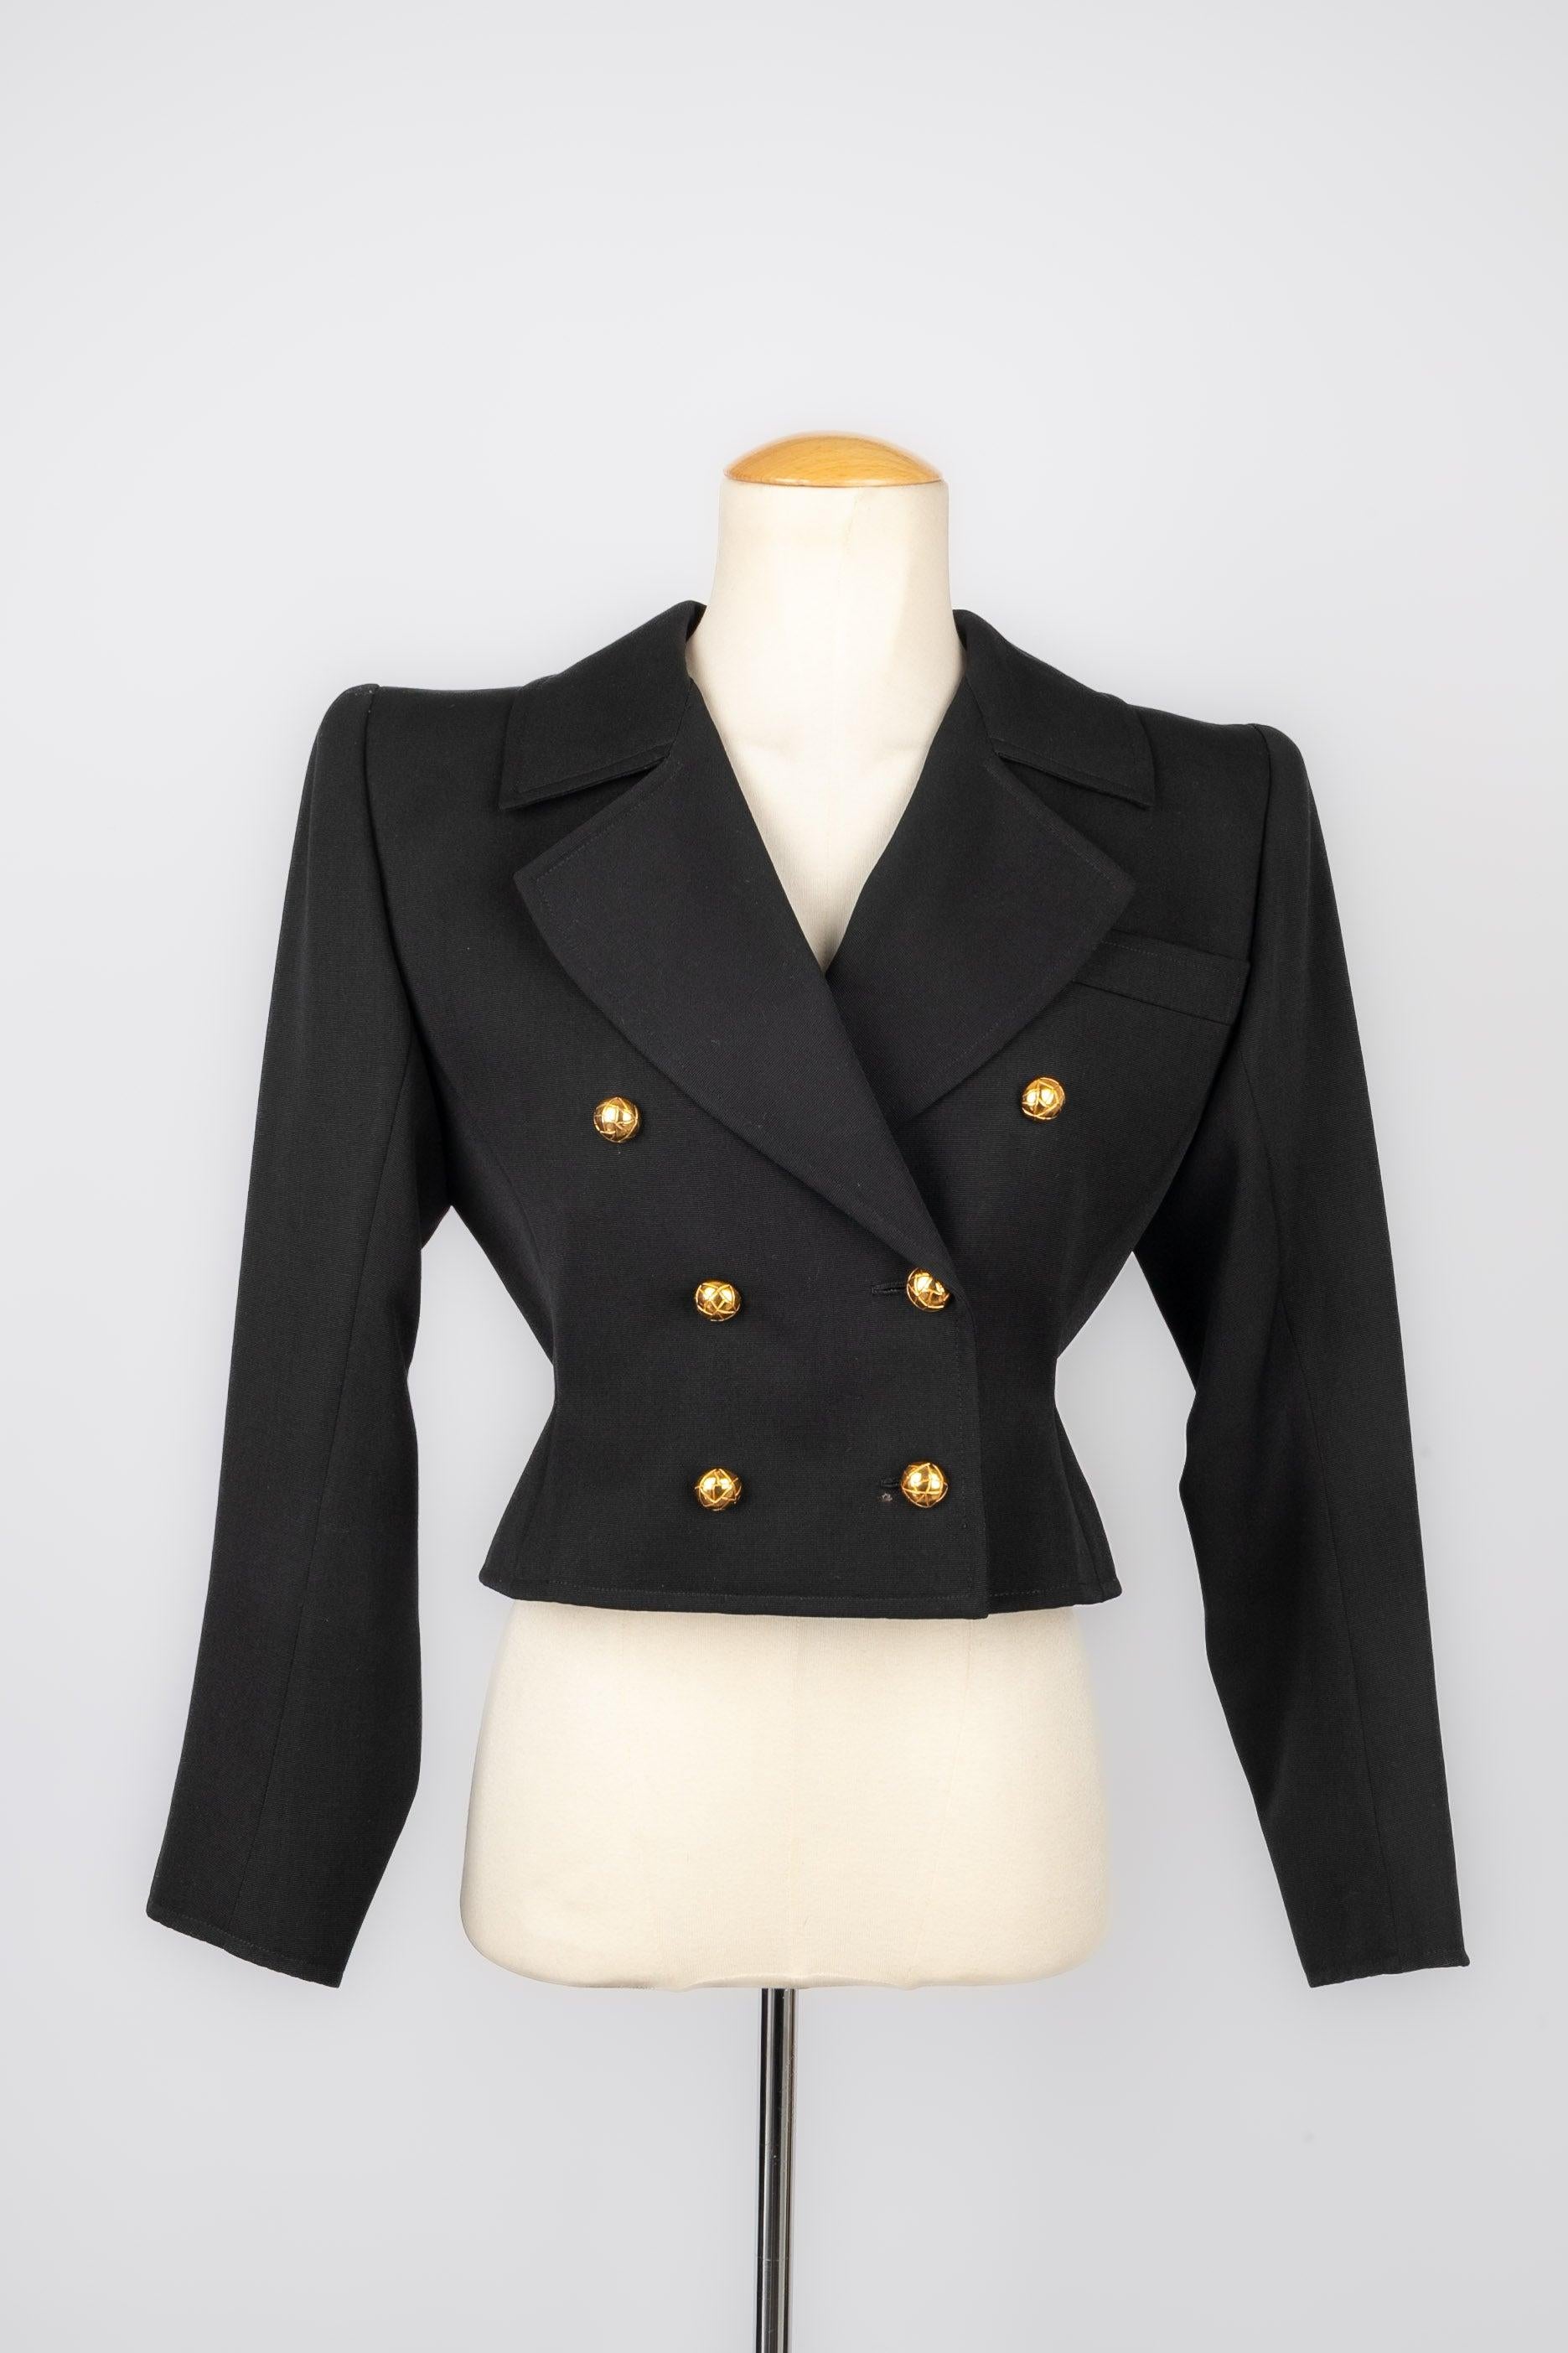 Yves Saint Laurent Black Skirt Suit Enlivened with Satin Belt Haute Couture For Sale 1